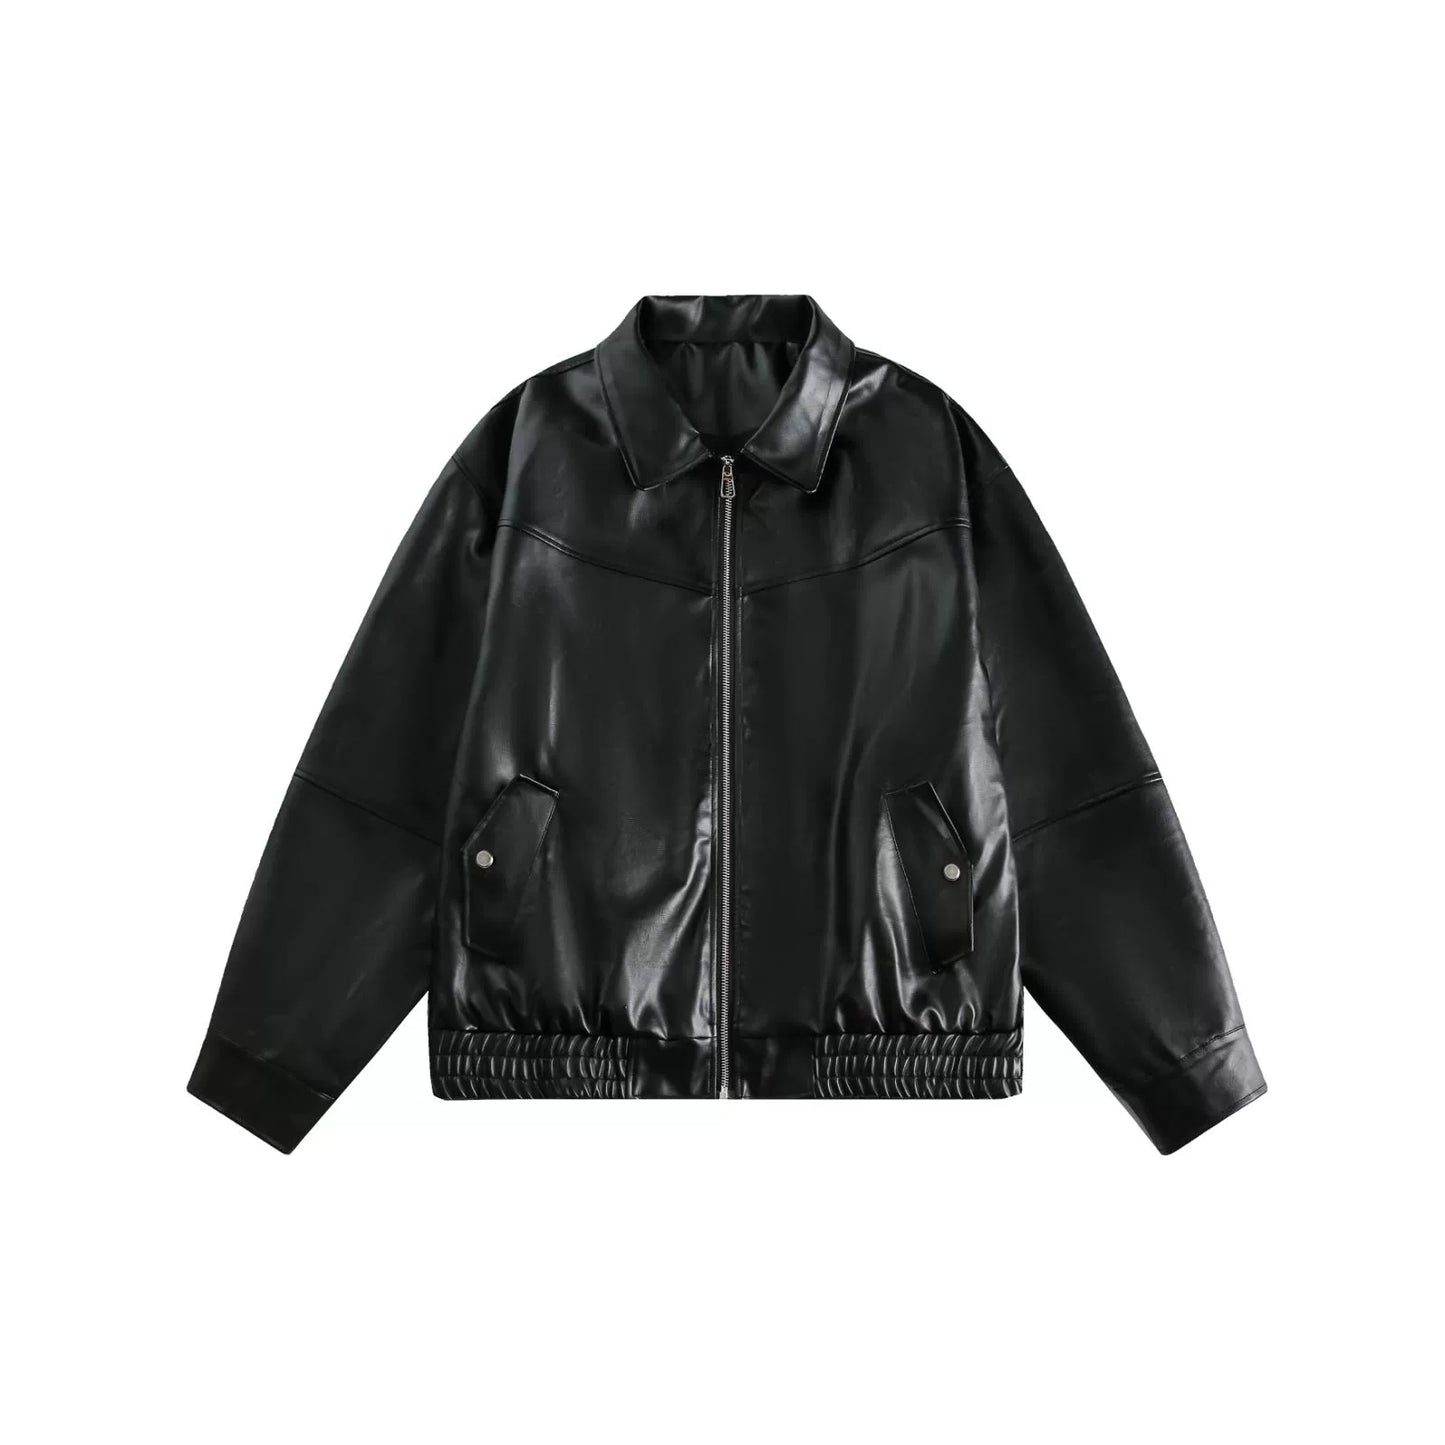 American Retro Black Leather Jacket